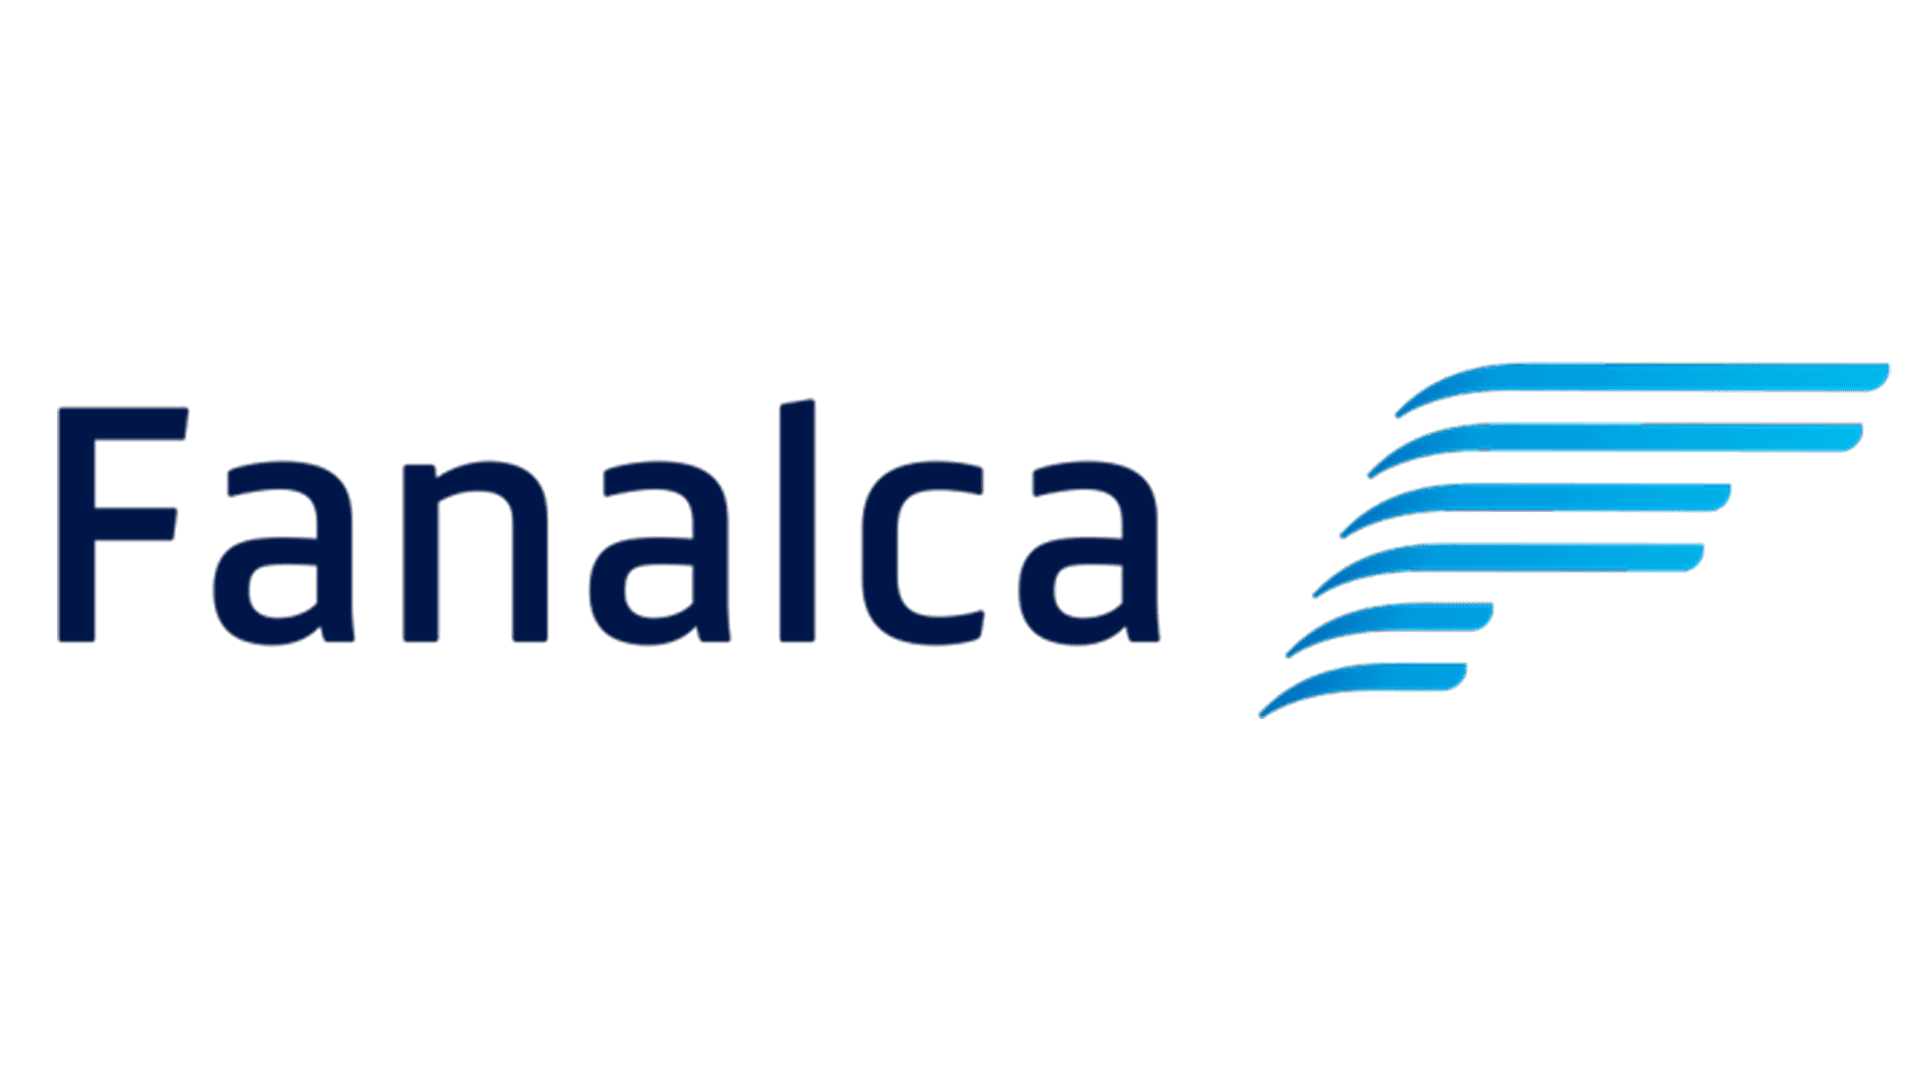 Fanalca's logo